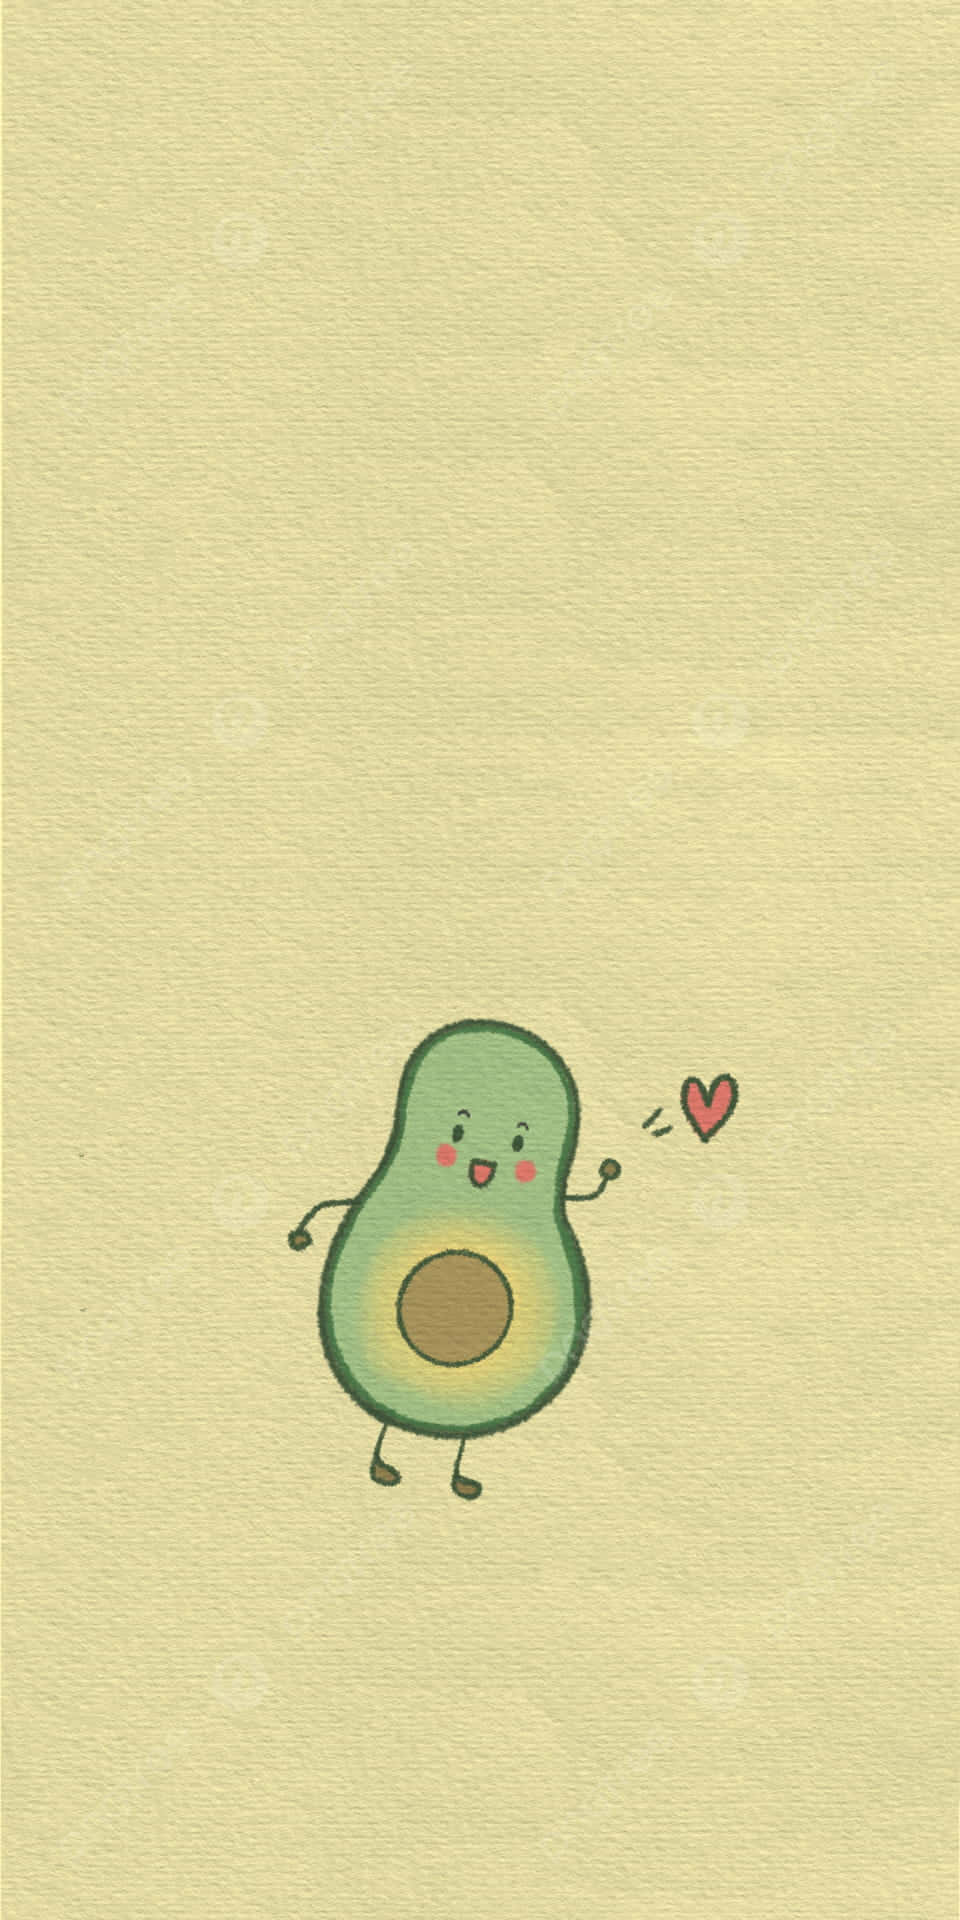 IPhone wallpaper with a cute avocado - Avocado